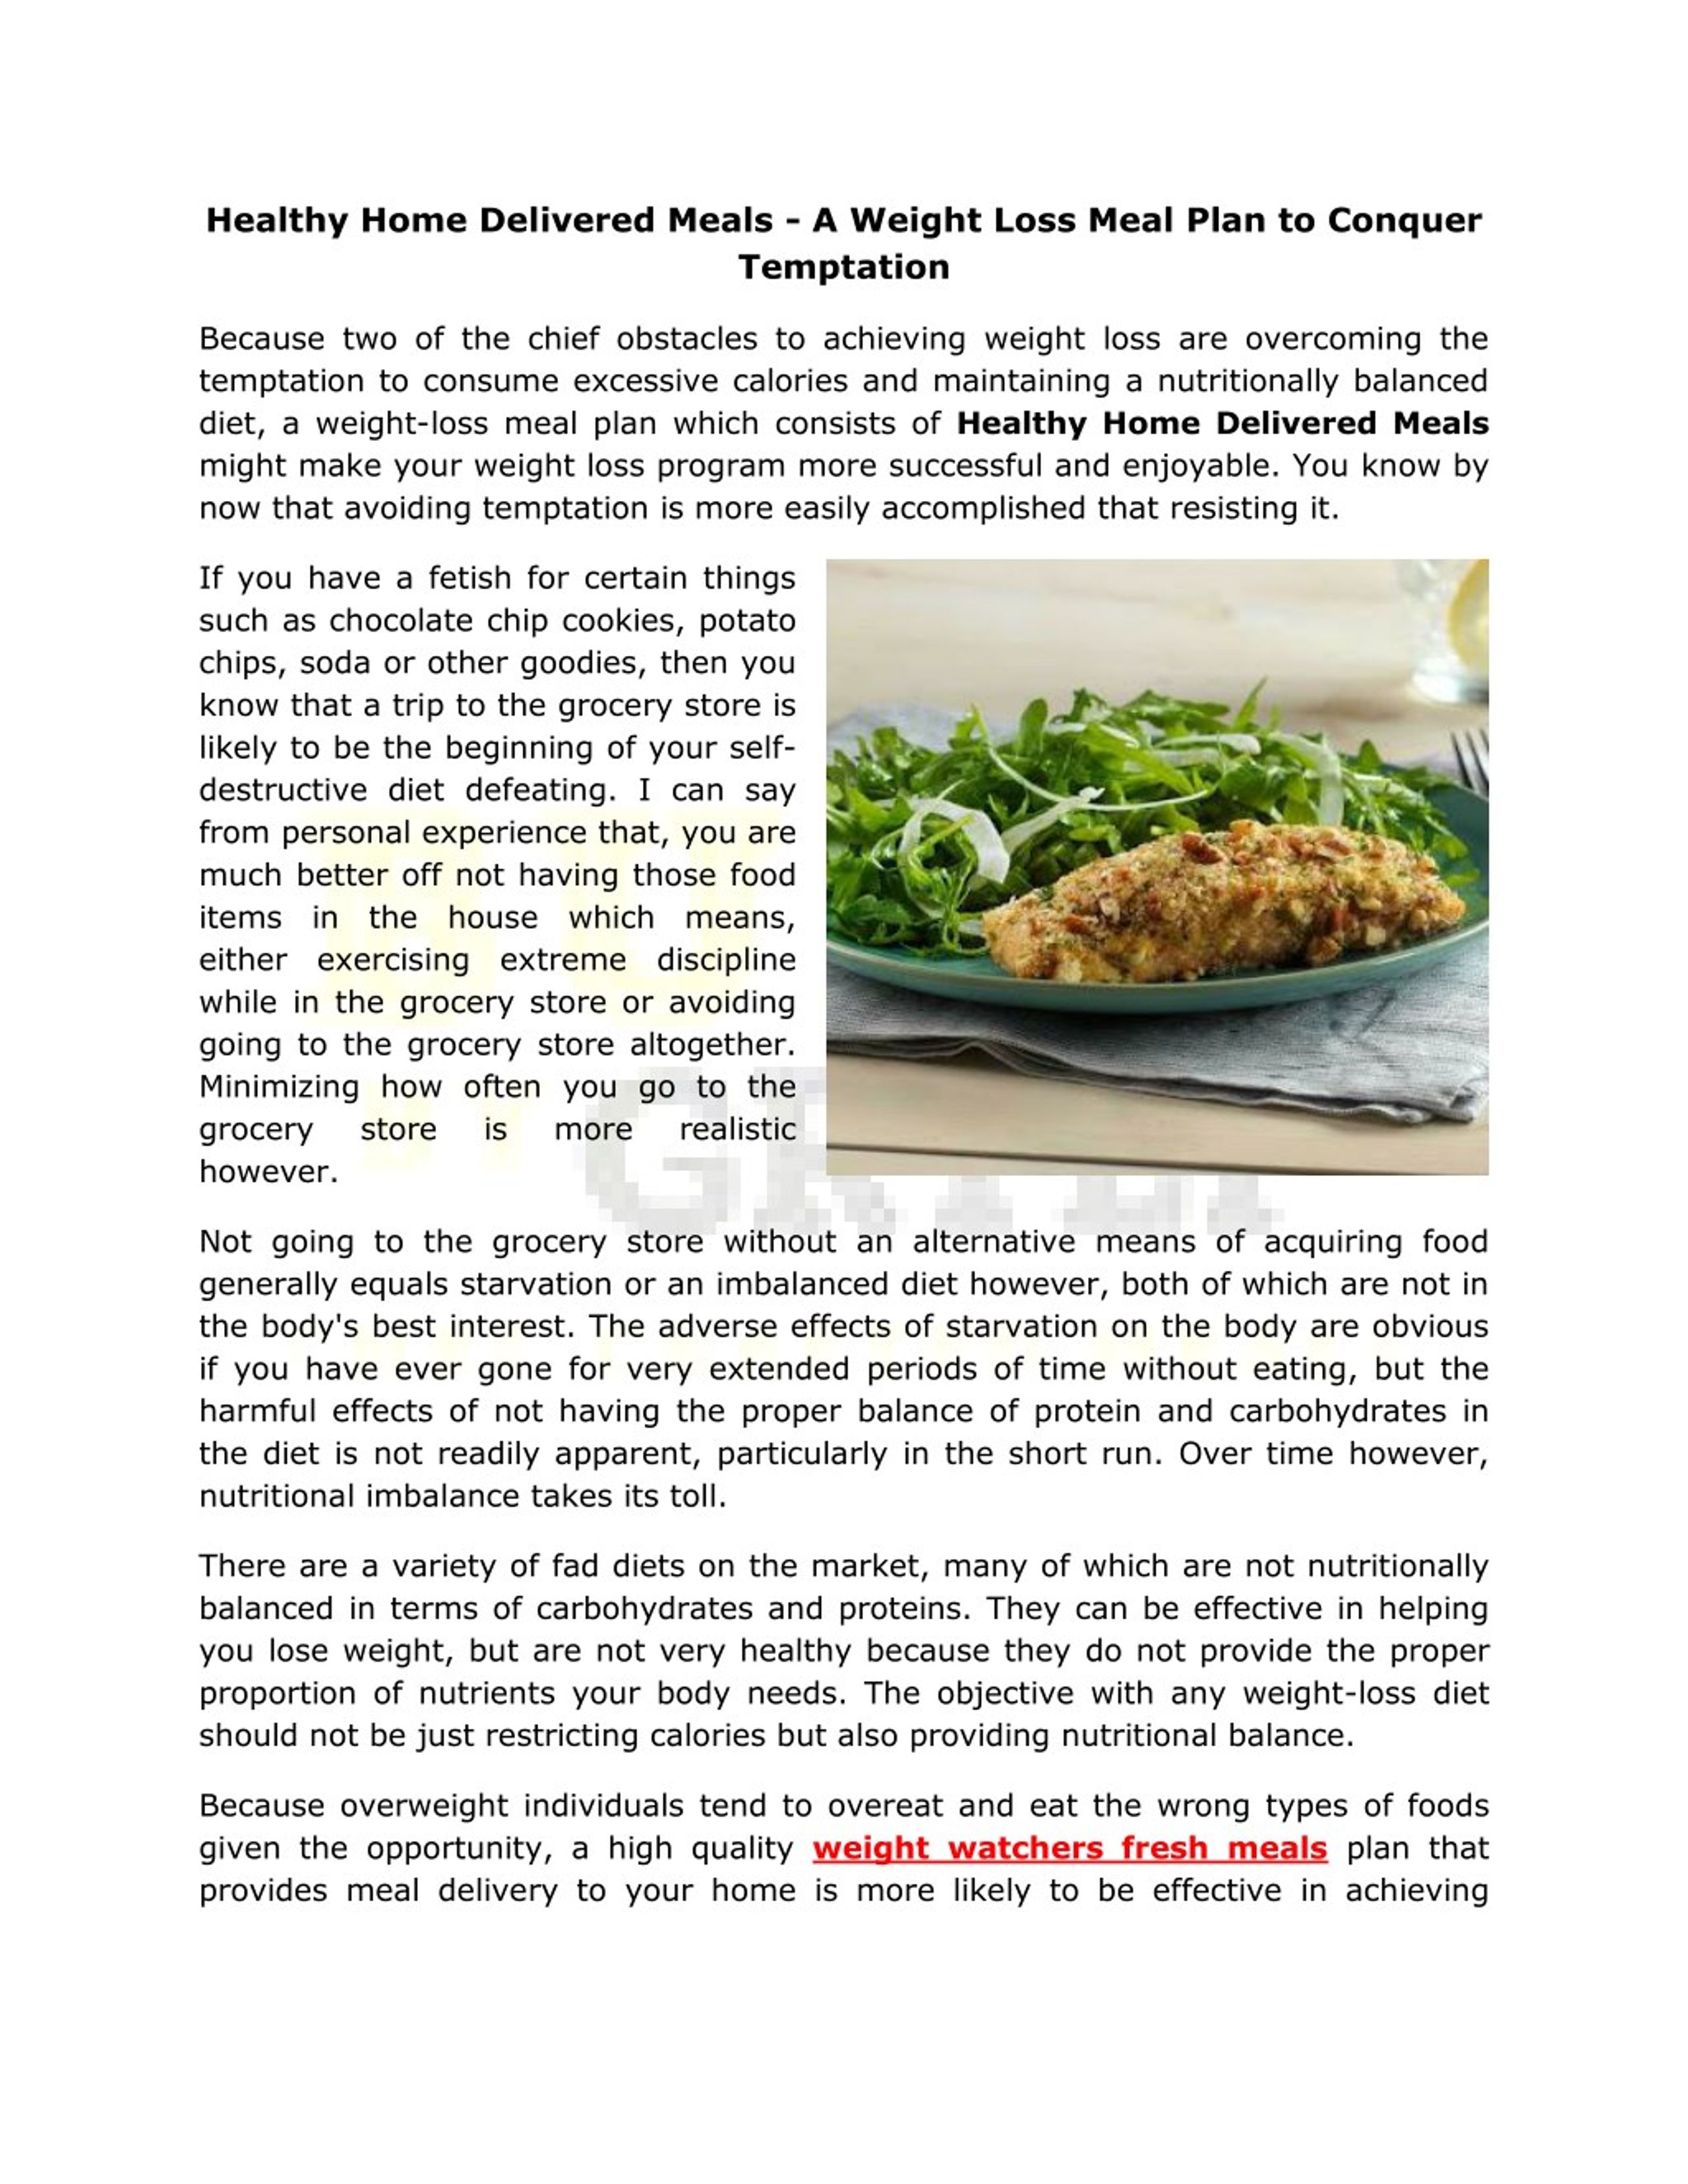 https://image4.slideserve.com/7665041/healthy-home-delivered-meals-a-weight-loss-meal-l.jpg